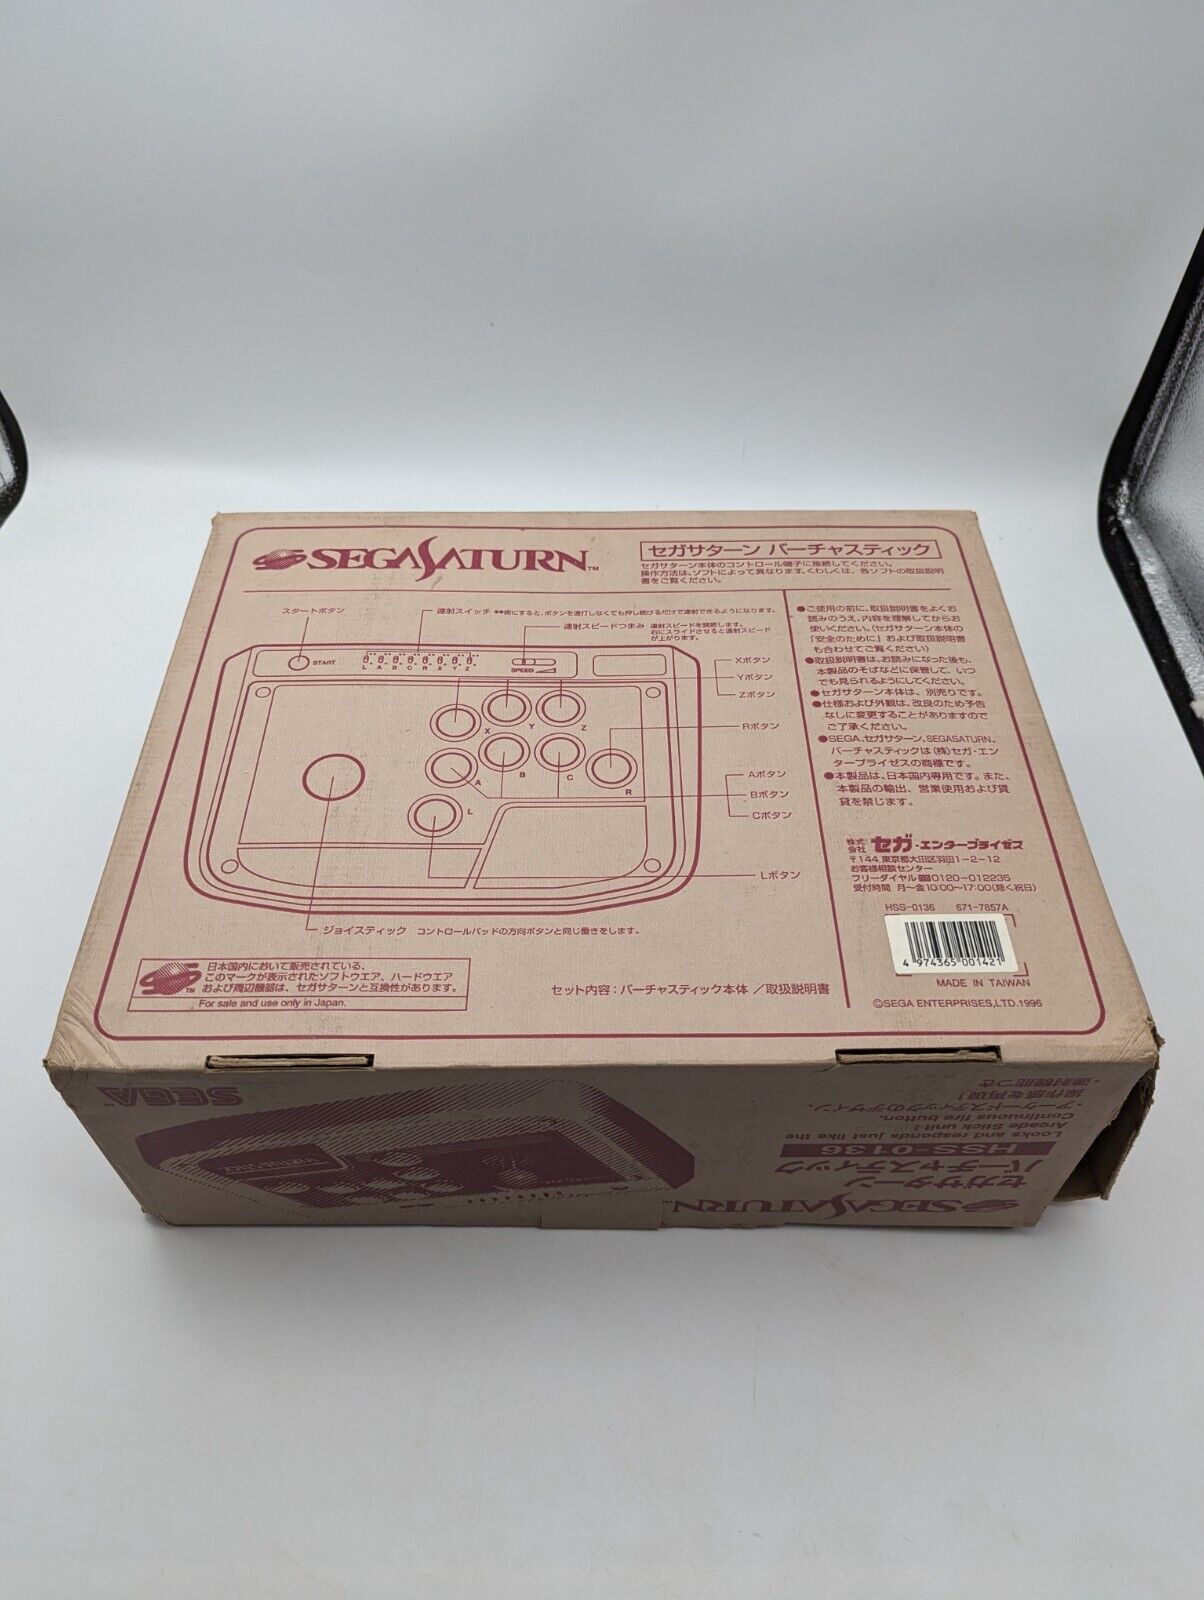 Sega Virtua Stick HSS-0136 Controller Saturn w/ Box , Manual Japan USED